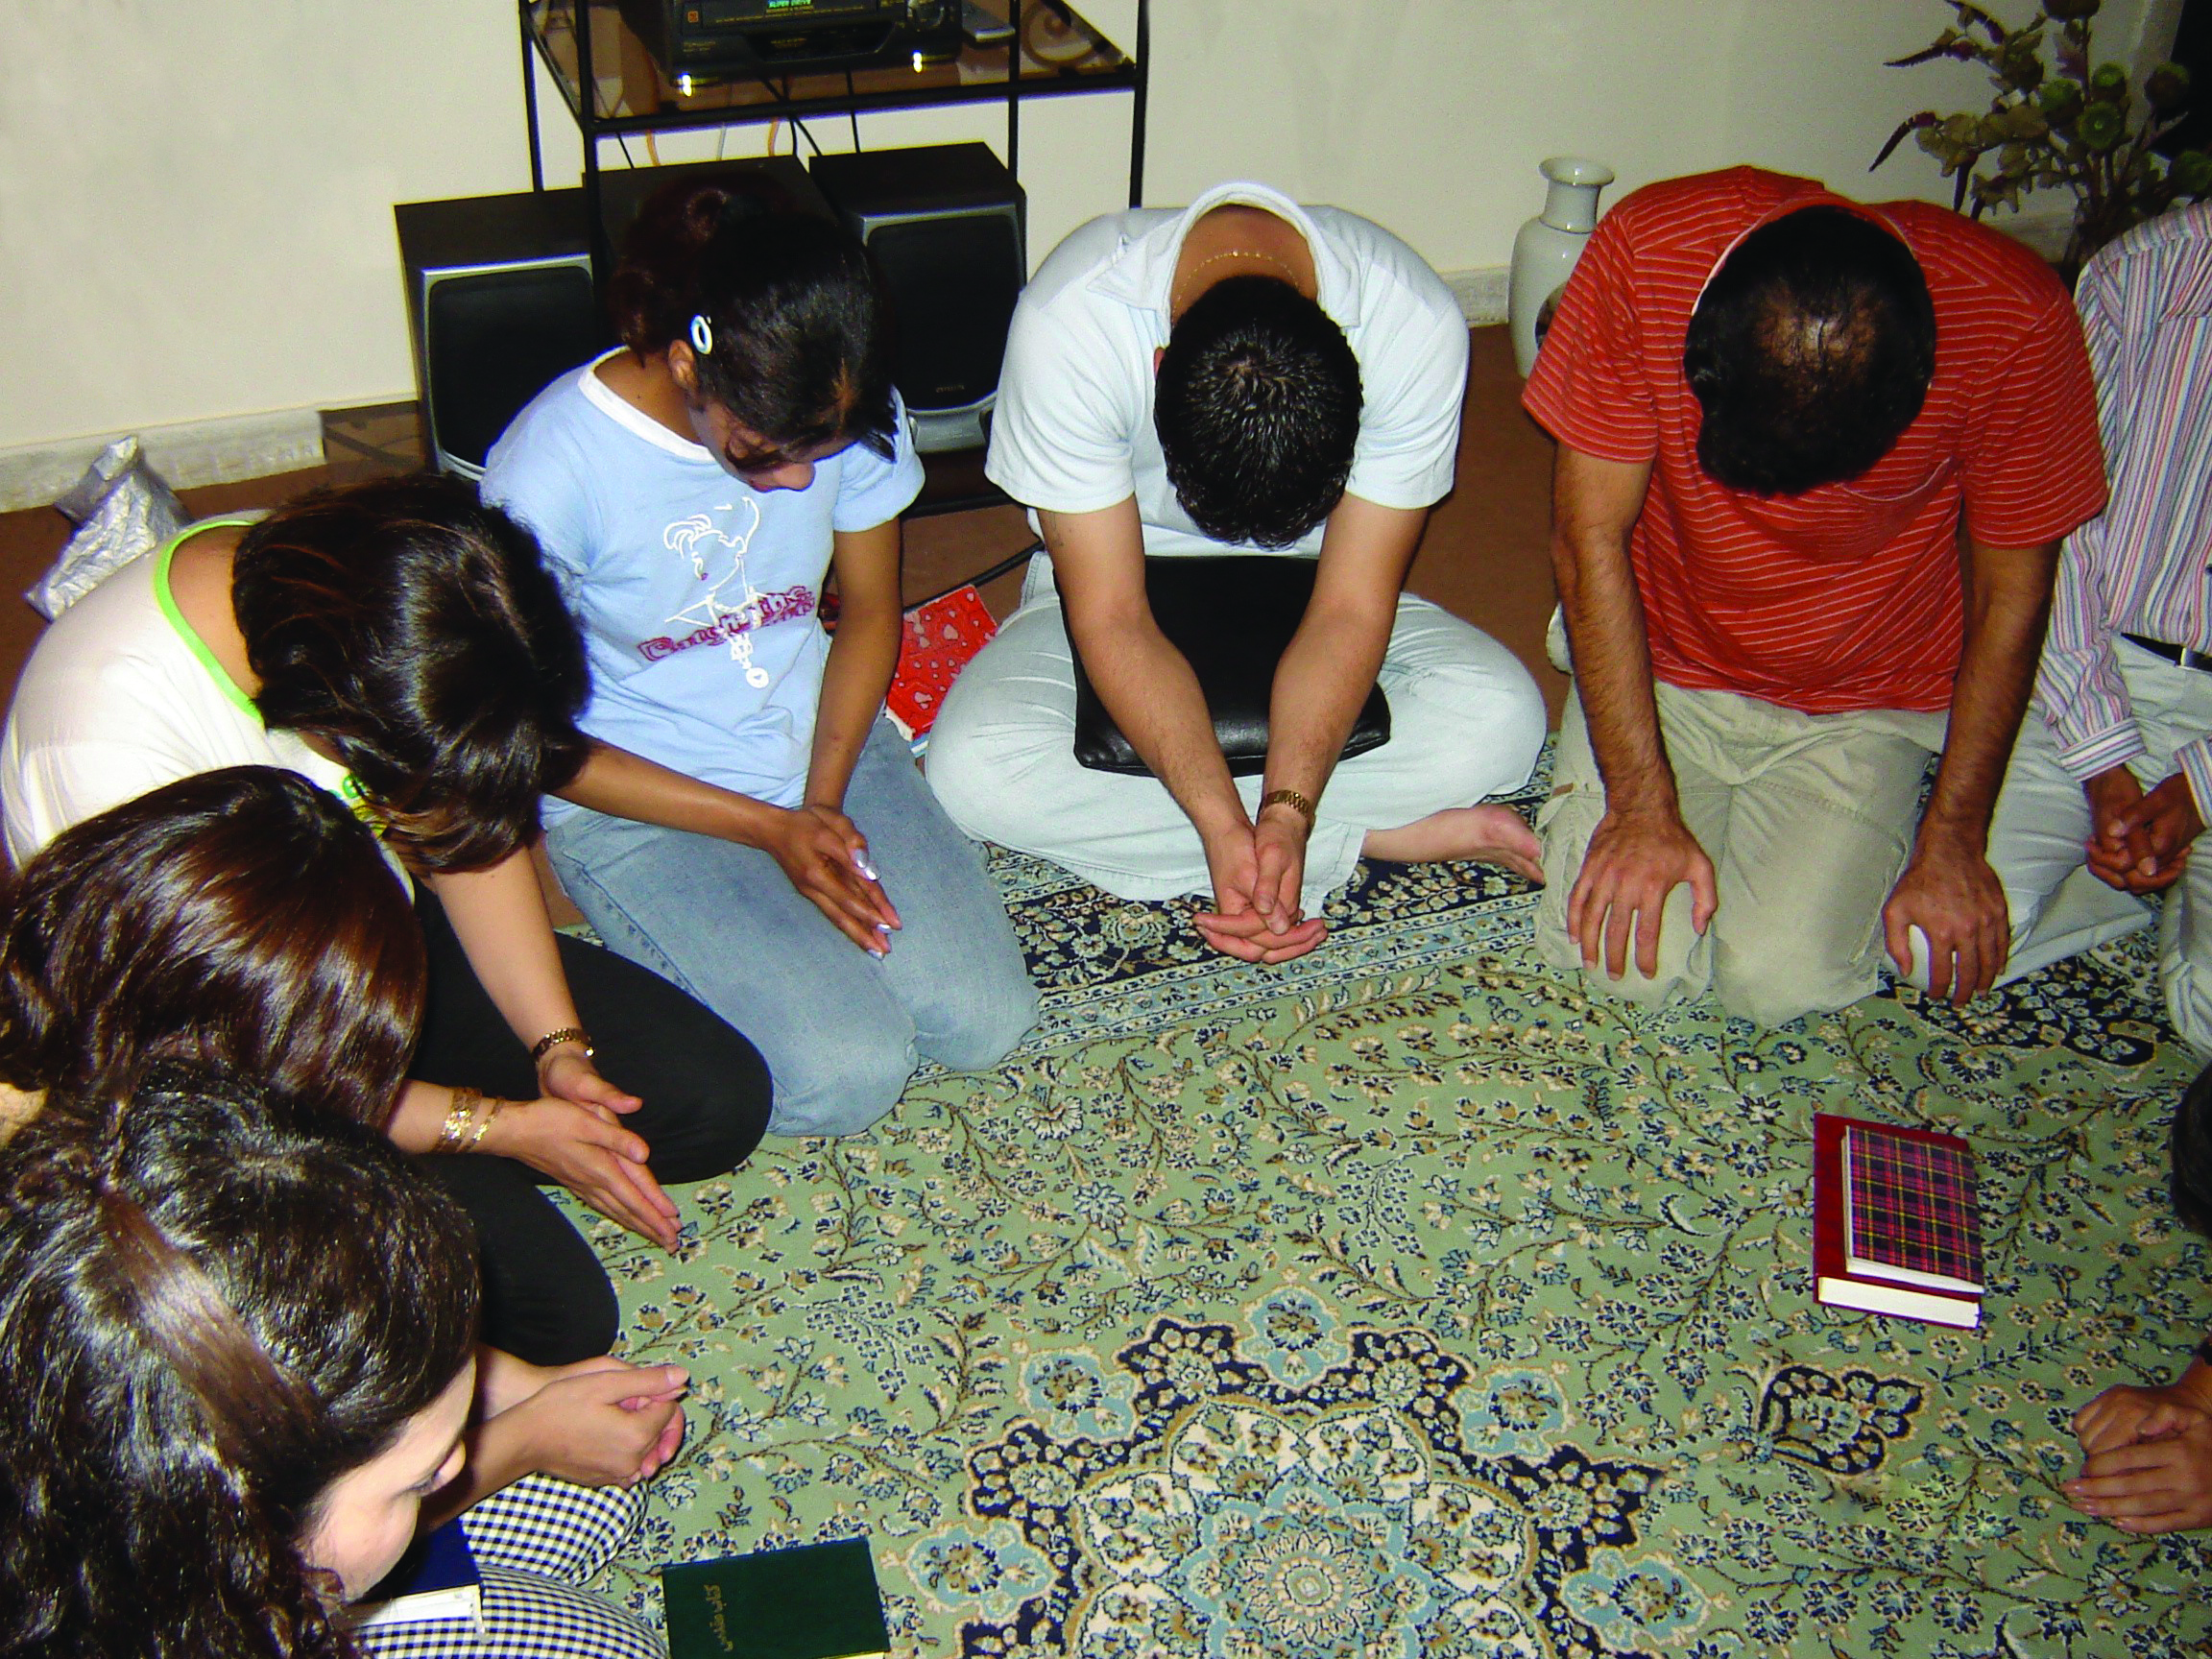 01 Iranian cell church praying